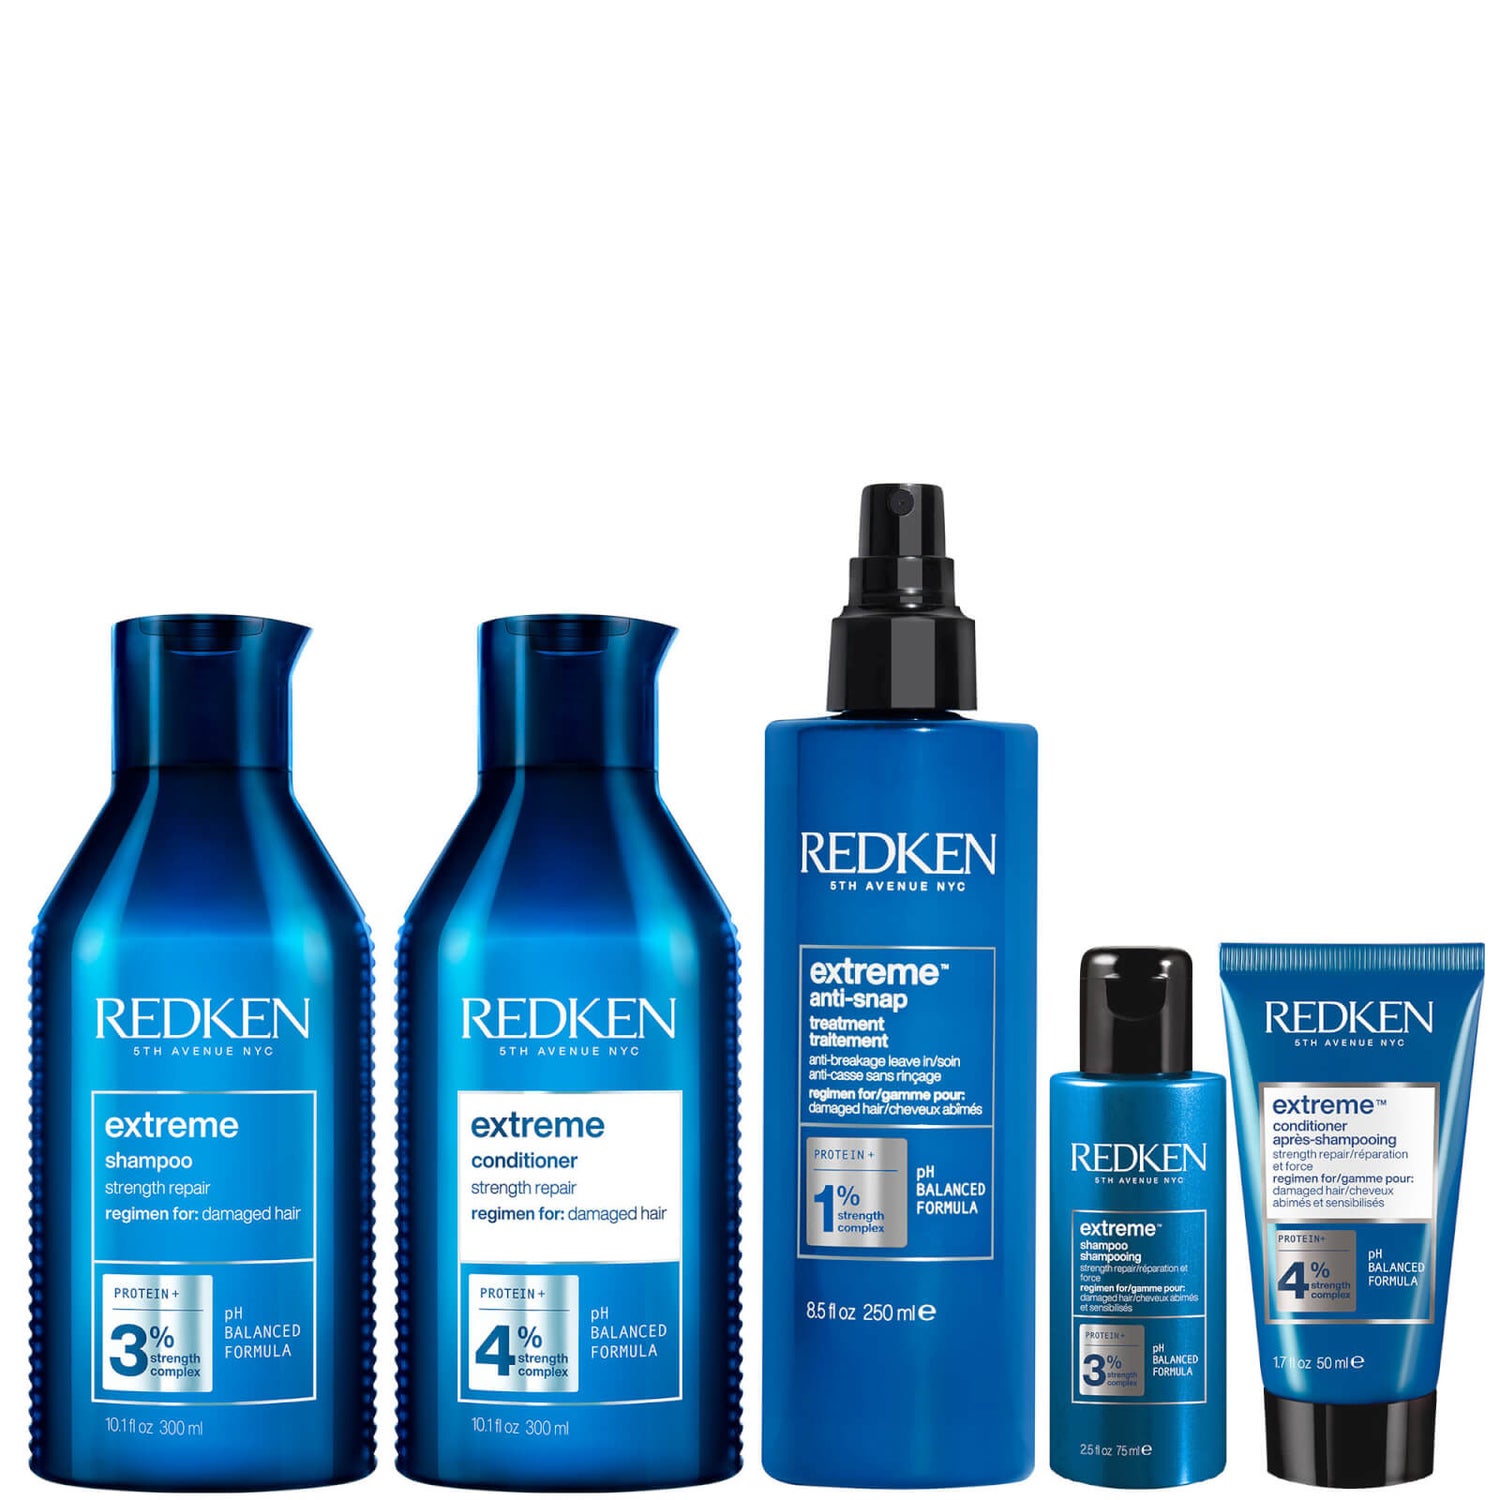 Redken Extreme Shampoo 300ml, Conditioner 300ml, Anti-Snap 250ml + Shampoo and Conditioner Travel Sizes Bundle (Worth £81.01)